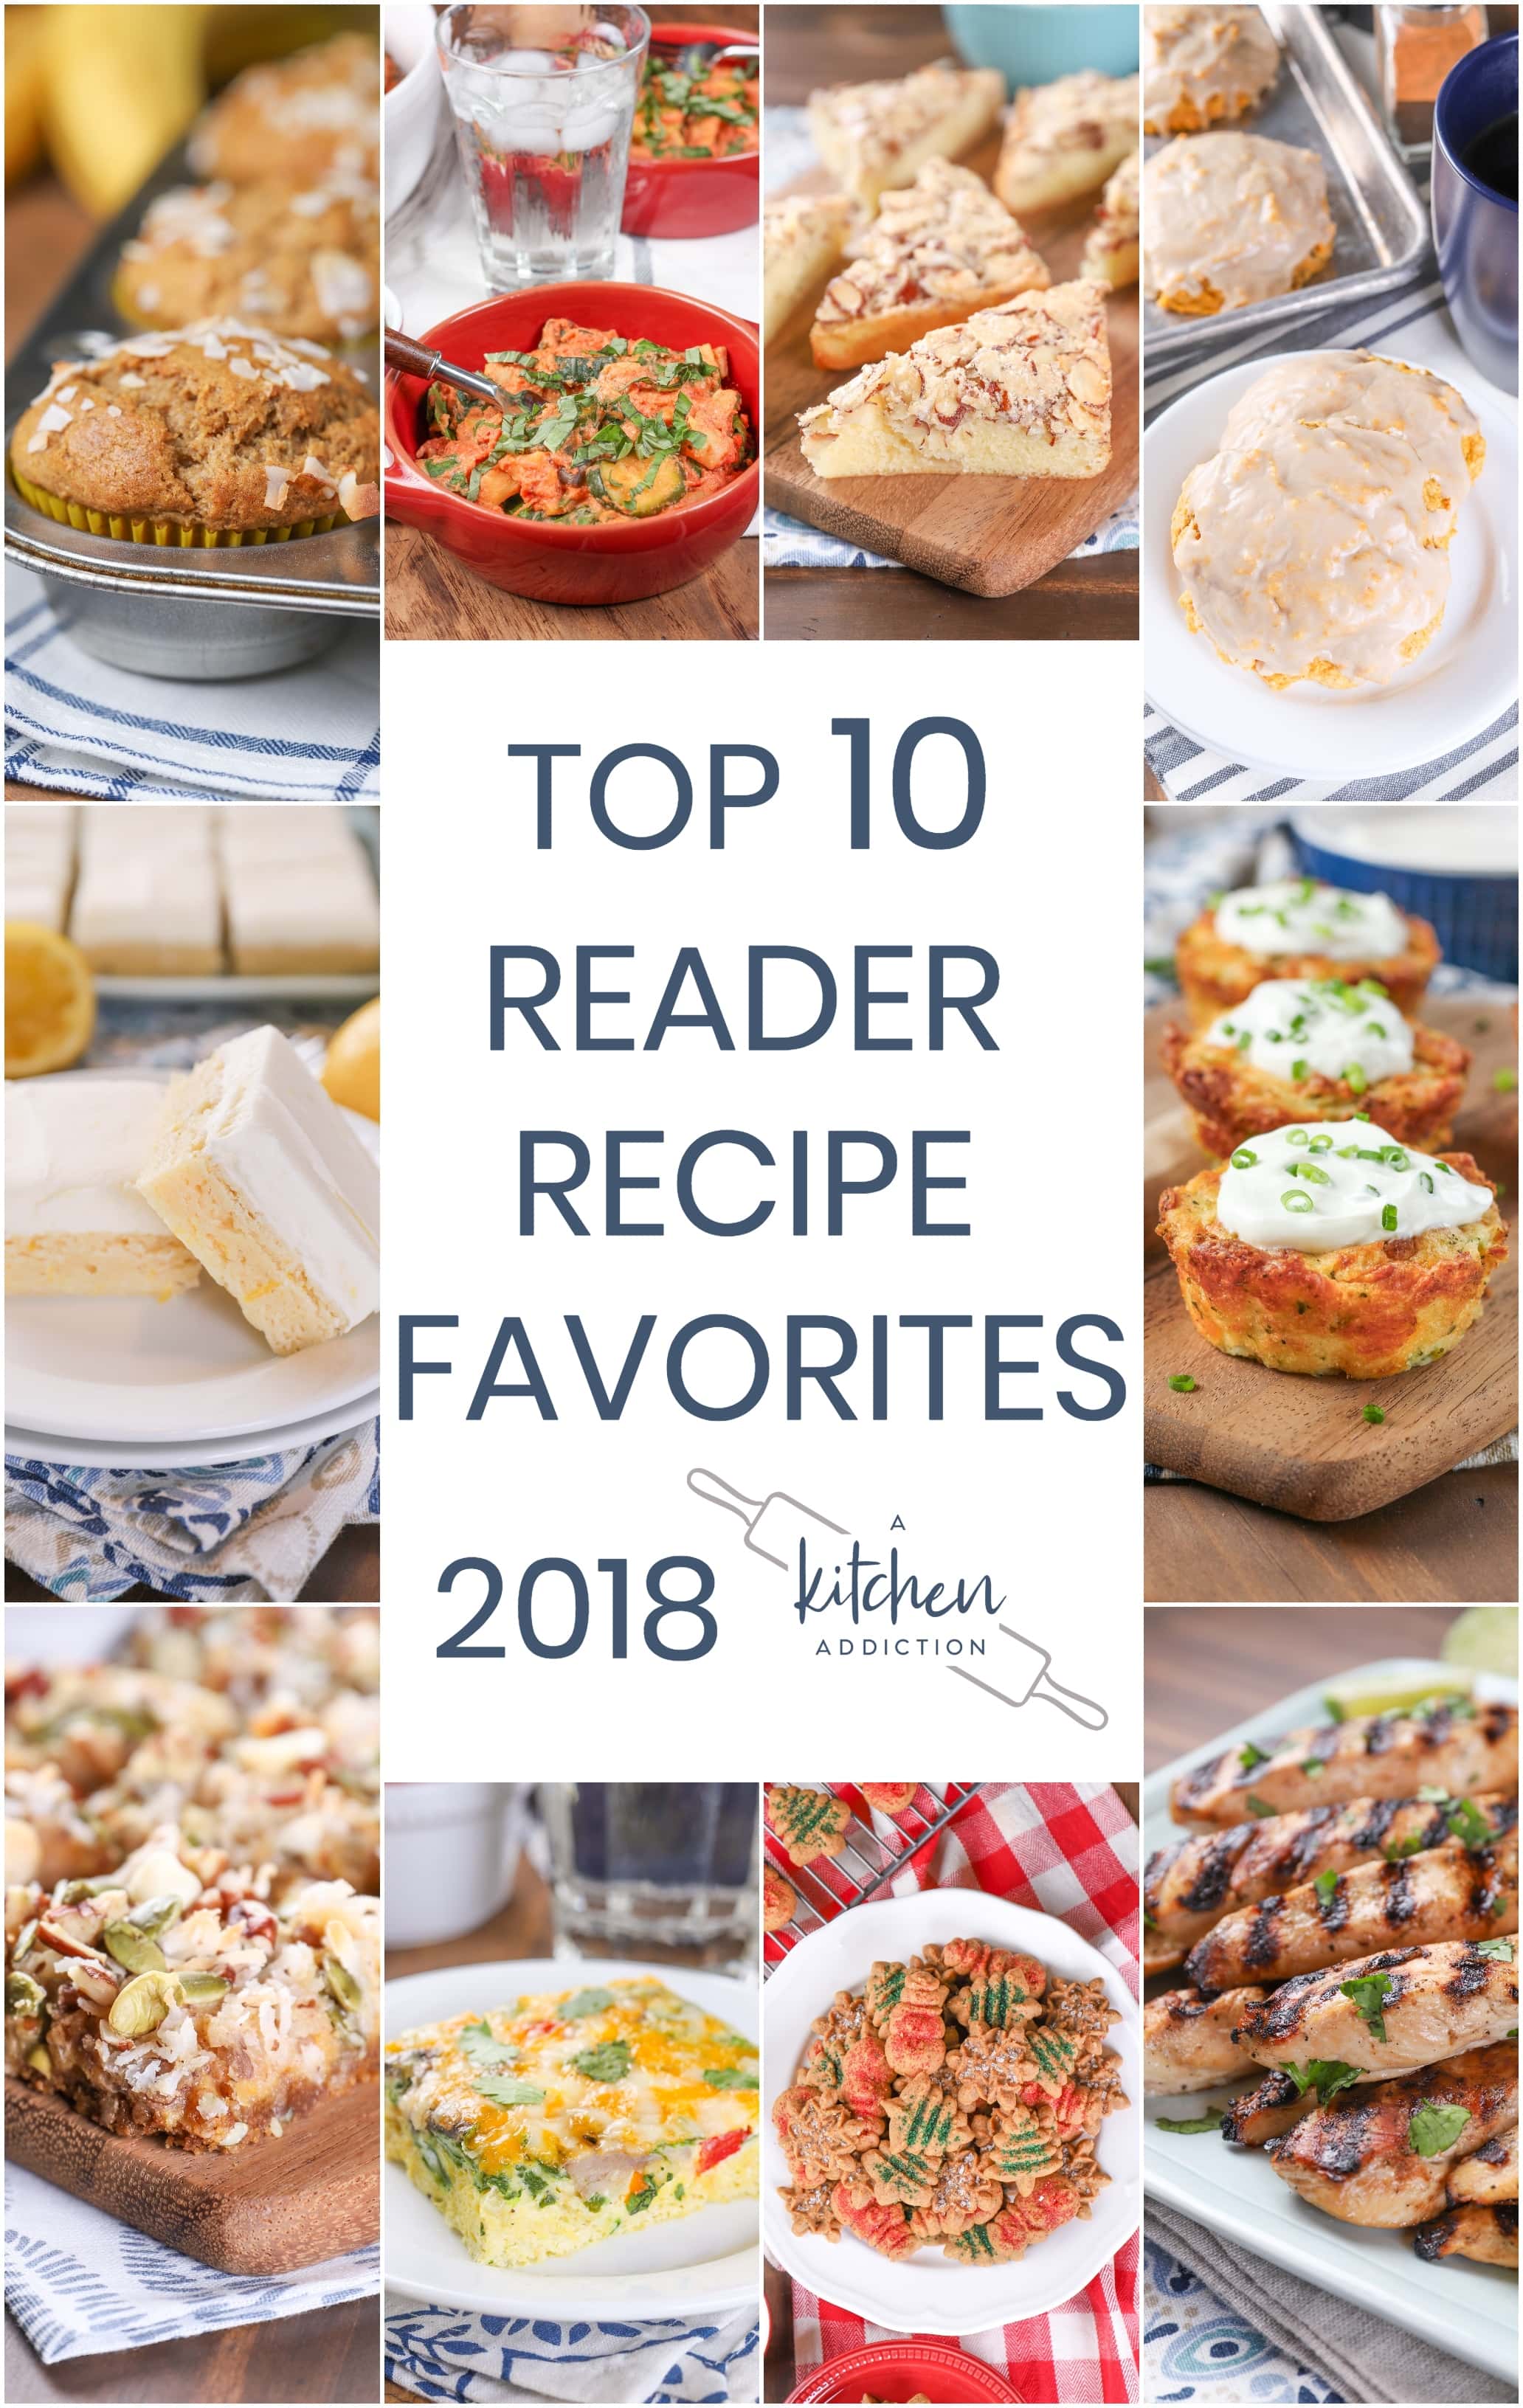 2018 Reader Recipe Favorites